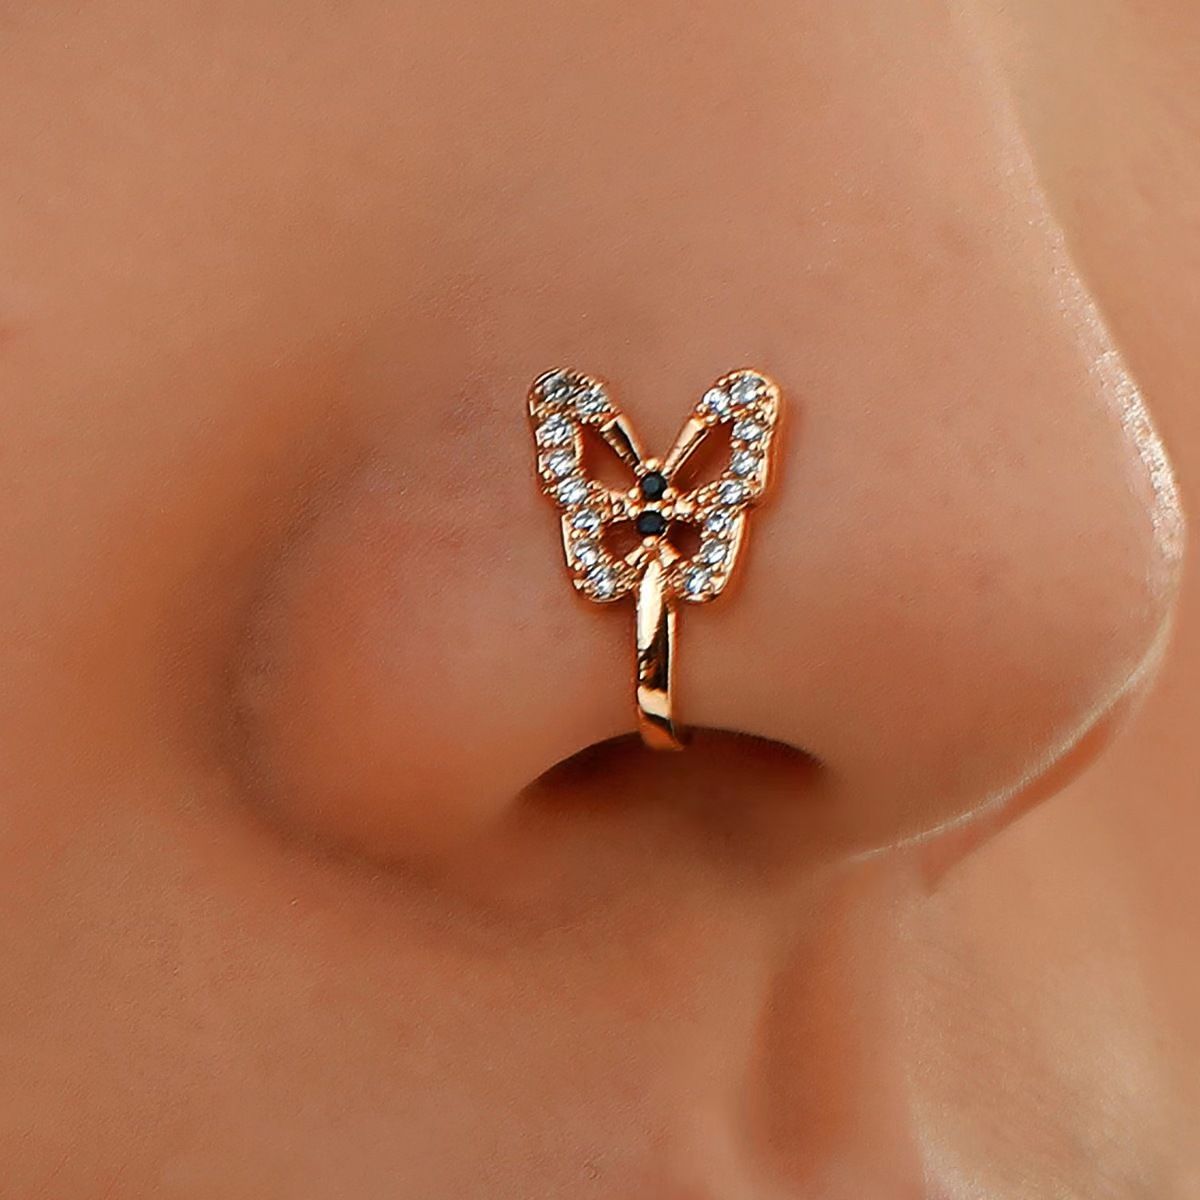 089 Women's Fashion Personality U-Shaped Nose Ring, Rhinestone Butterfly Nose Ring